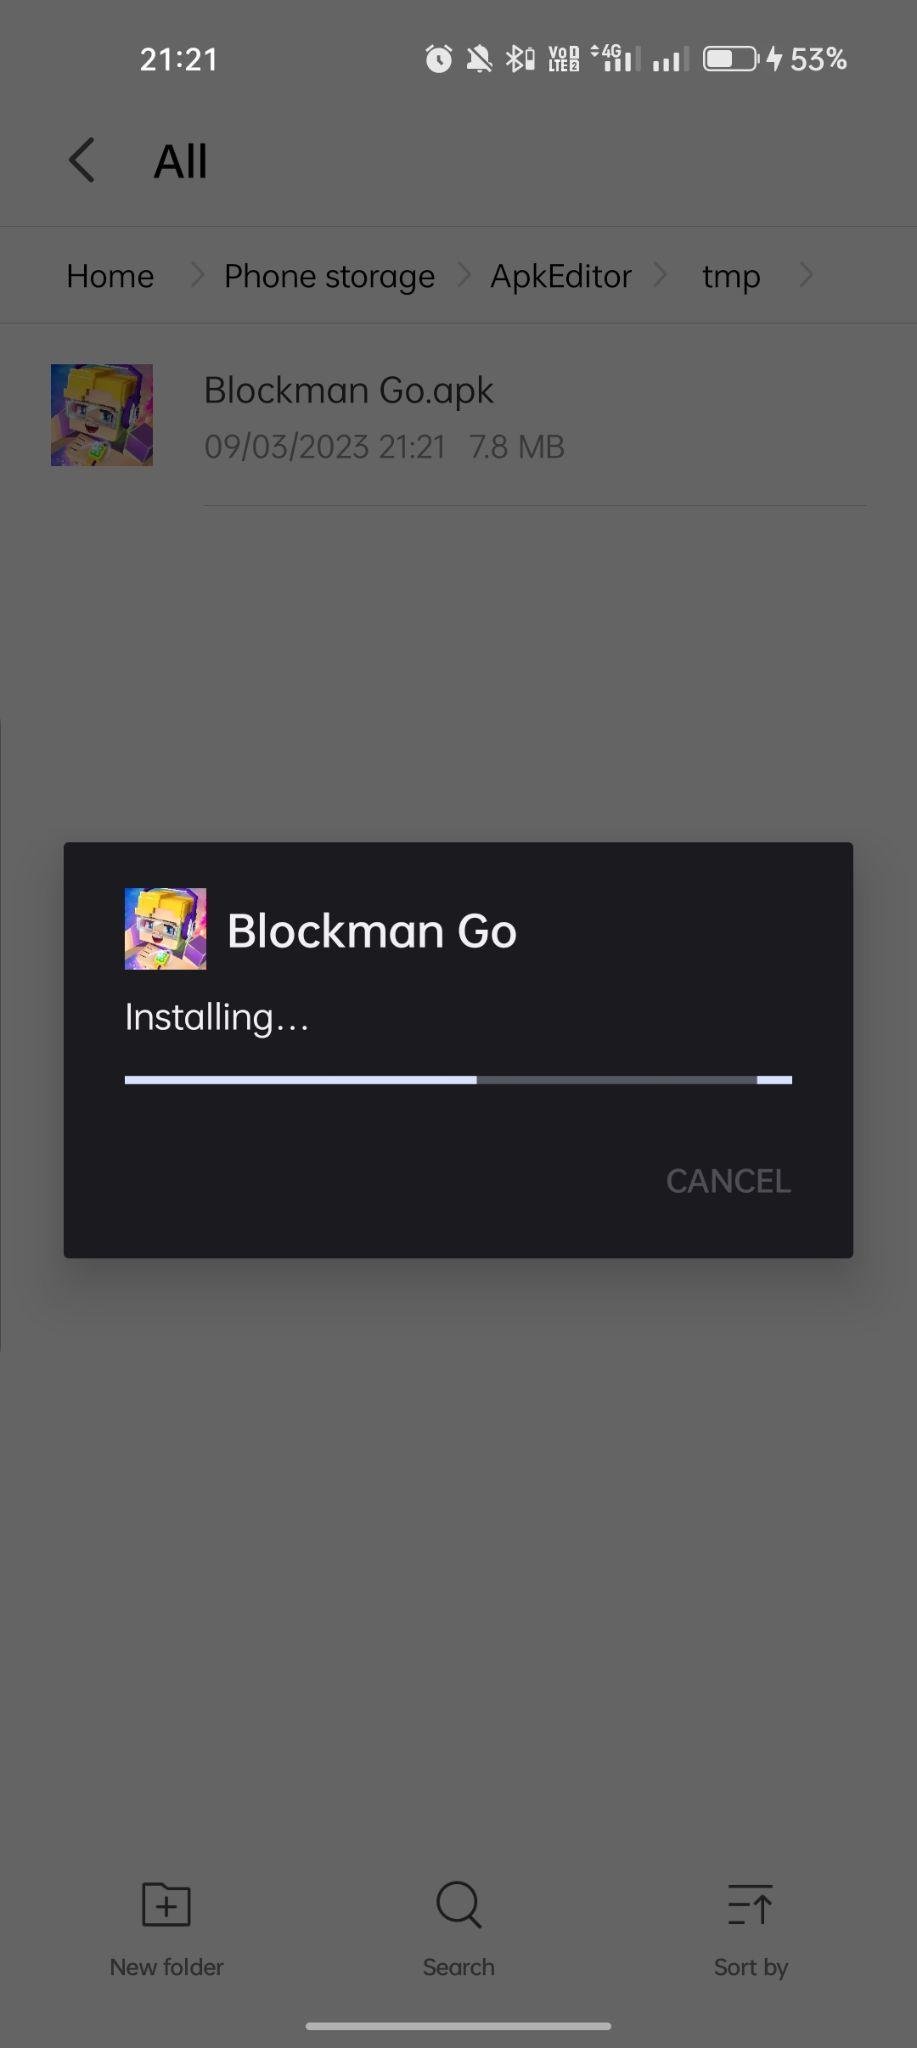 Blockman Go apk installing